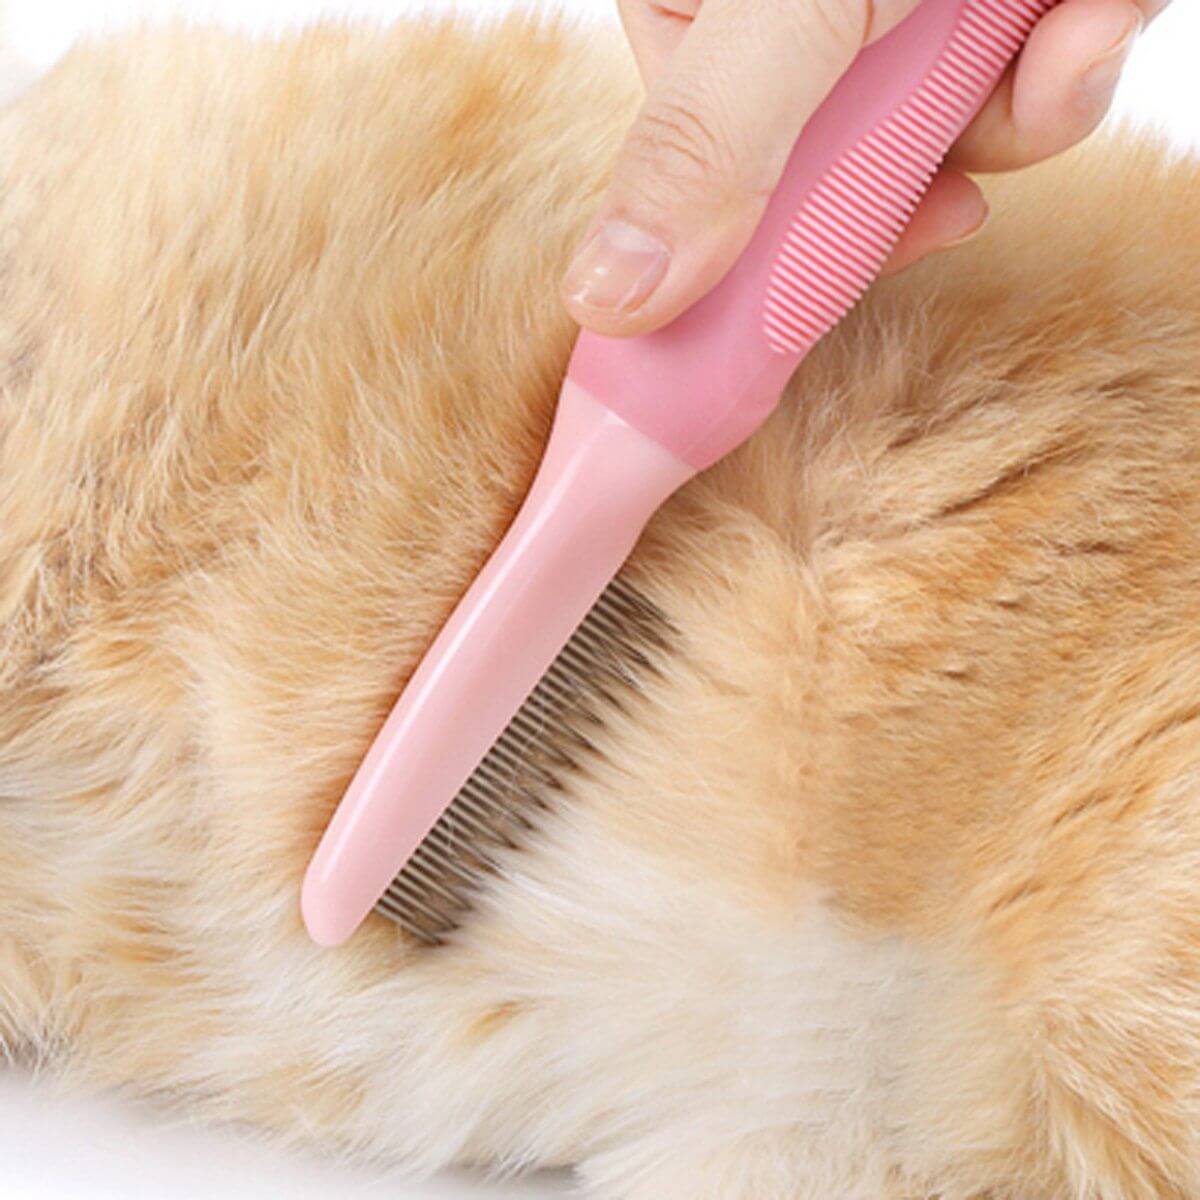 Tips Agar Bulu Kucing Lebat dan Tidak Rontok: Menyisir Bulu Kucing Secara Rutin